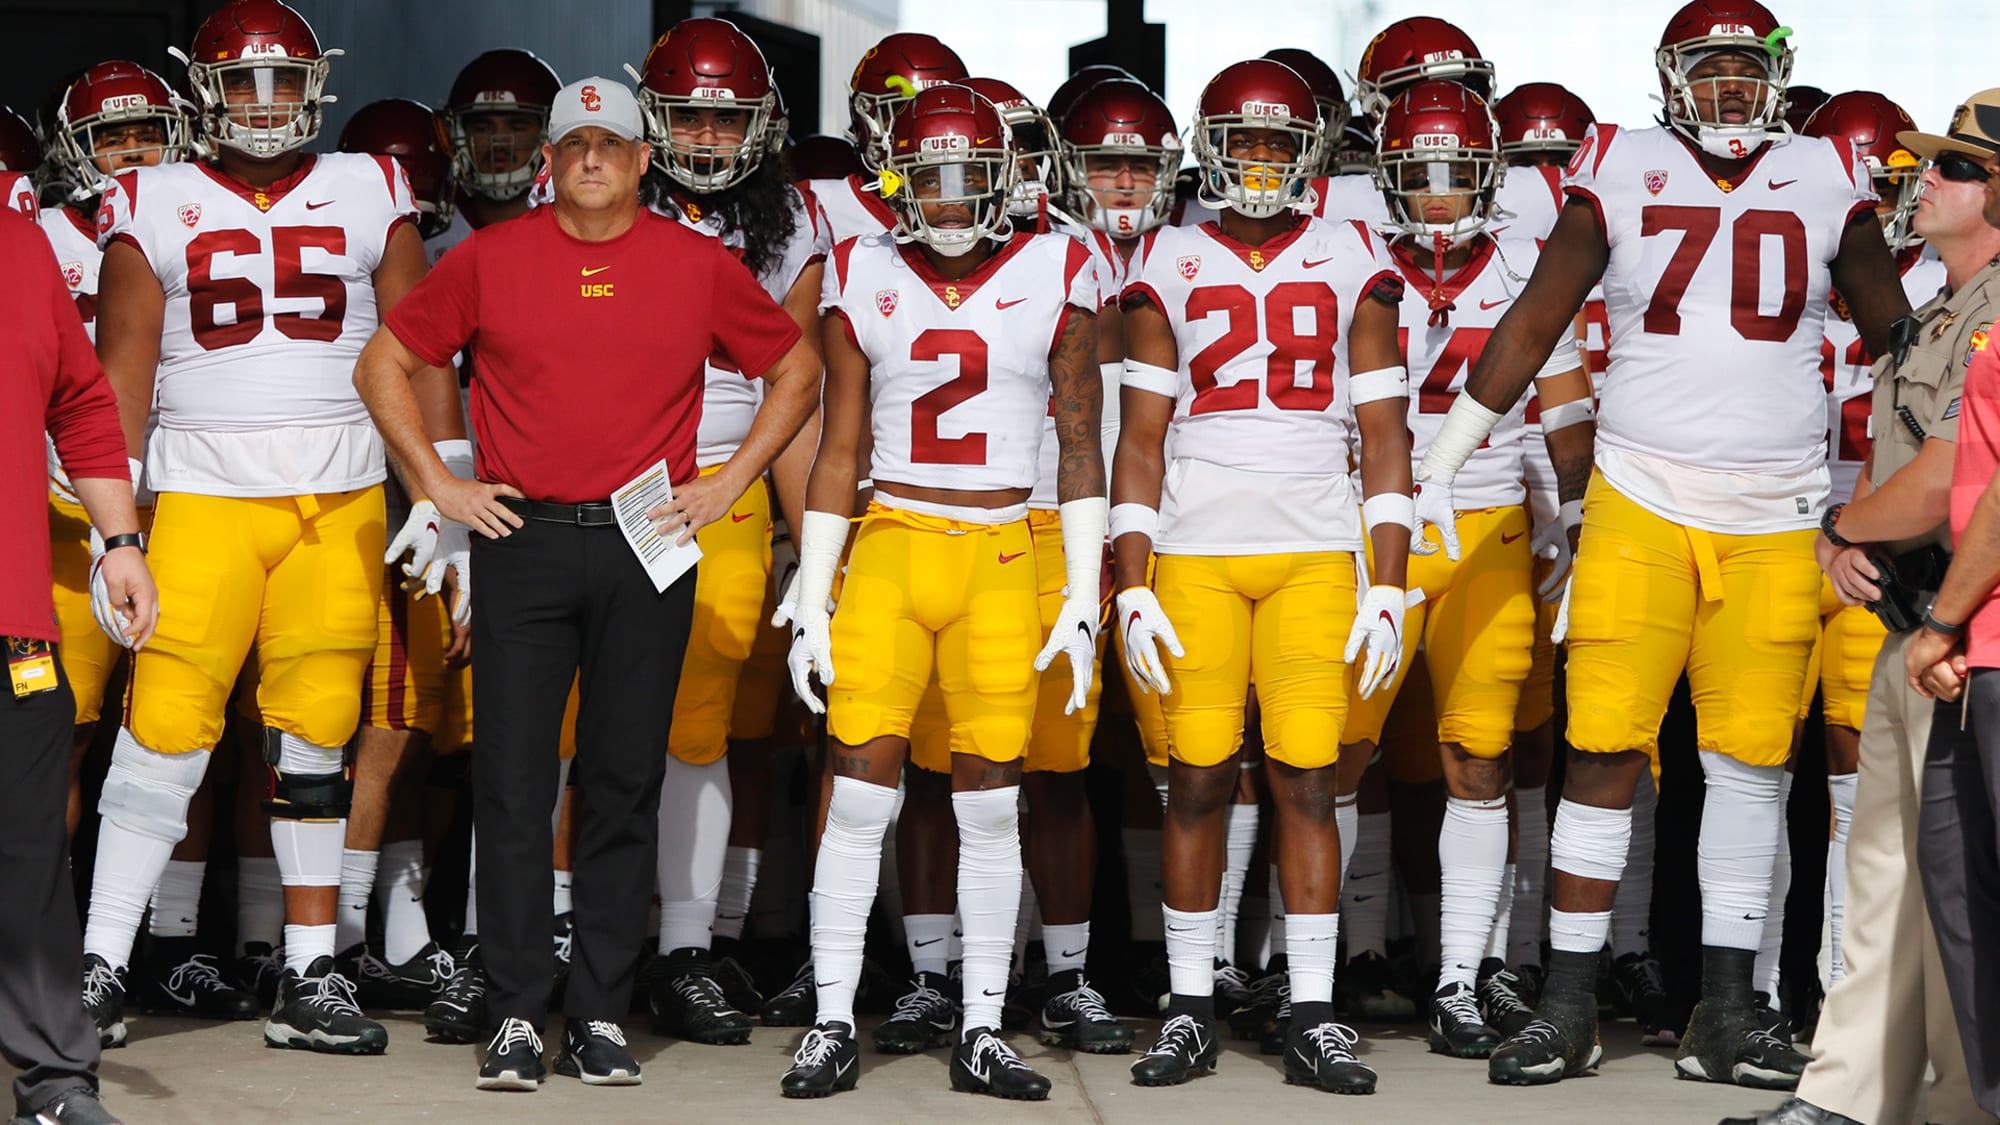 2020 USC football schedule released: Trojans face a tough slate